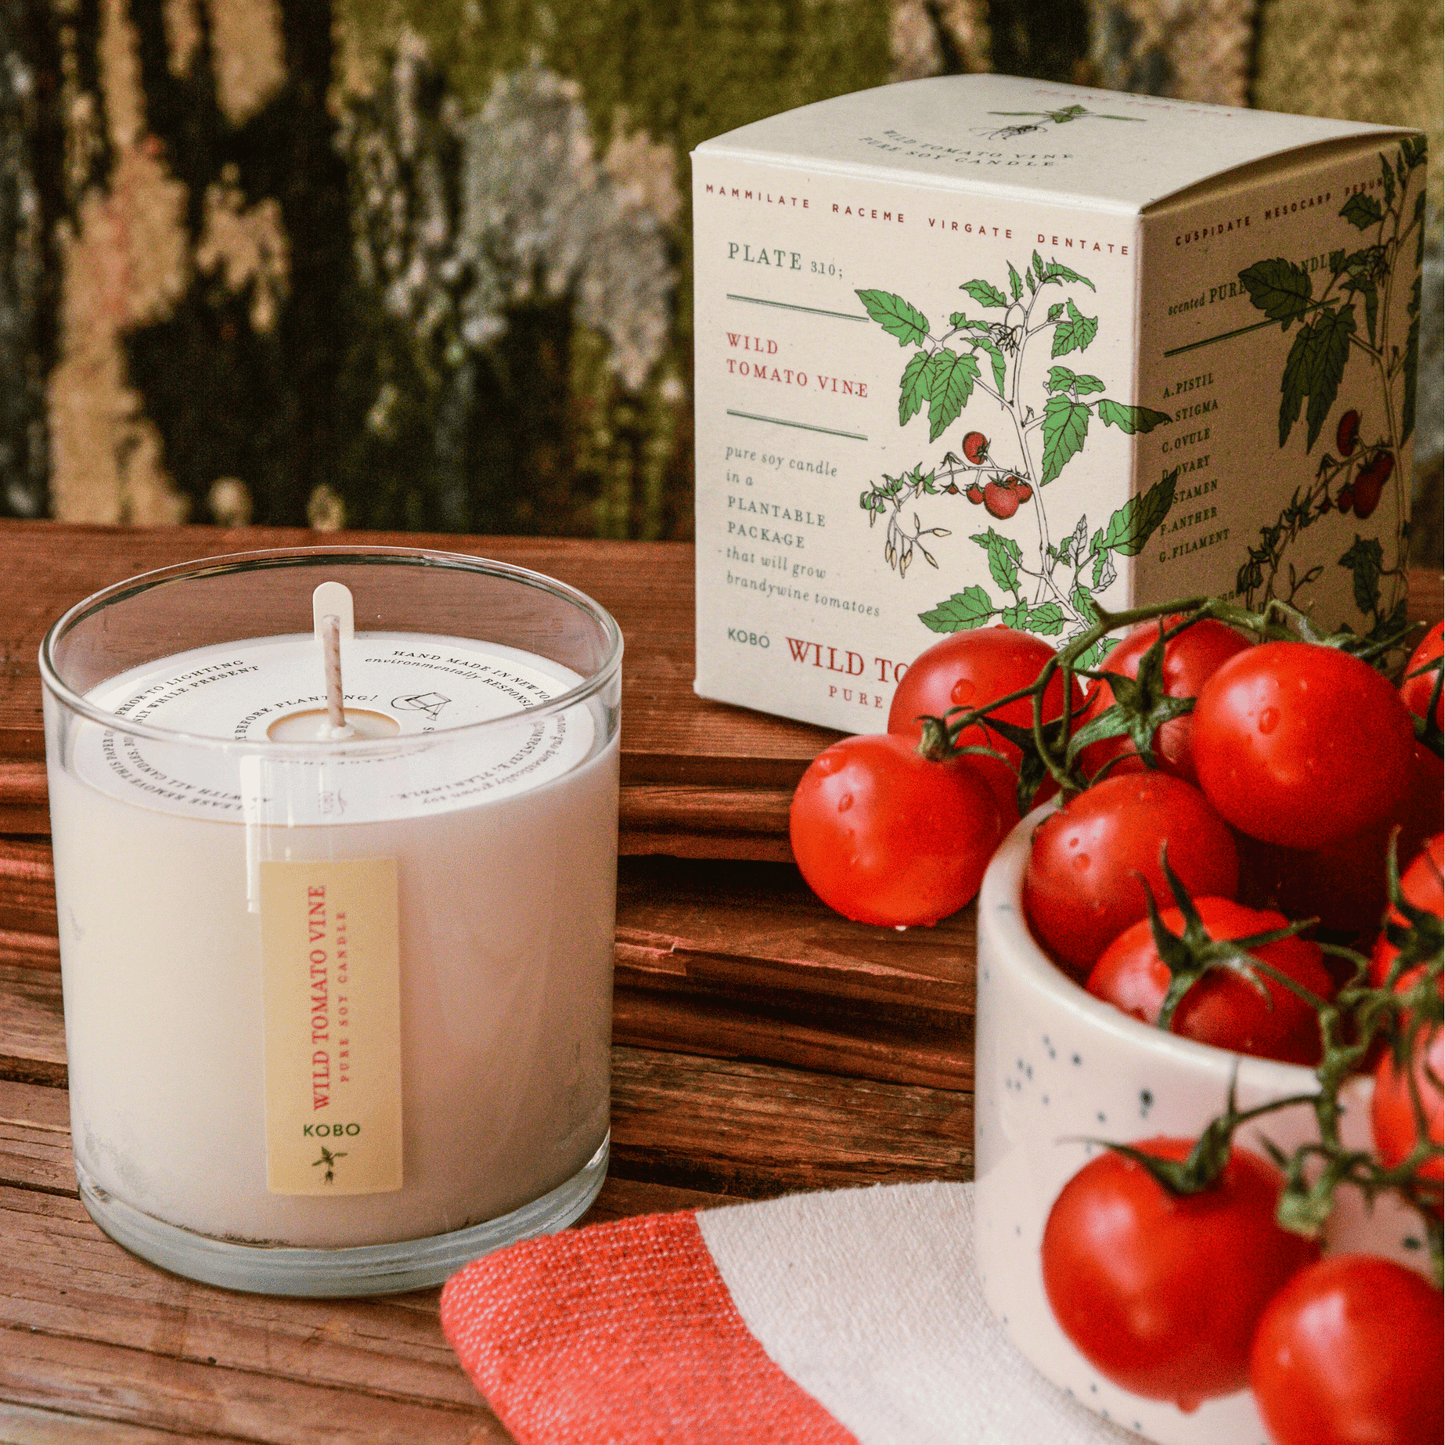 Alternate Image of Wild Tomato Vine Plant the Box Candle